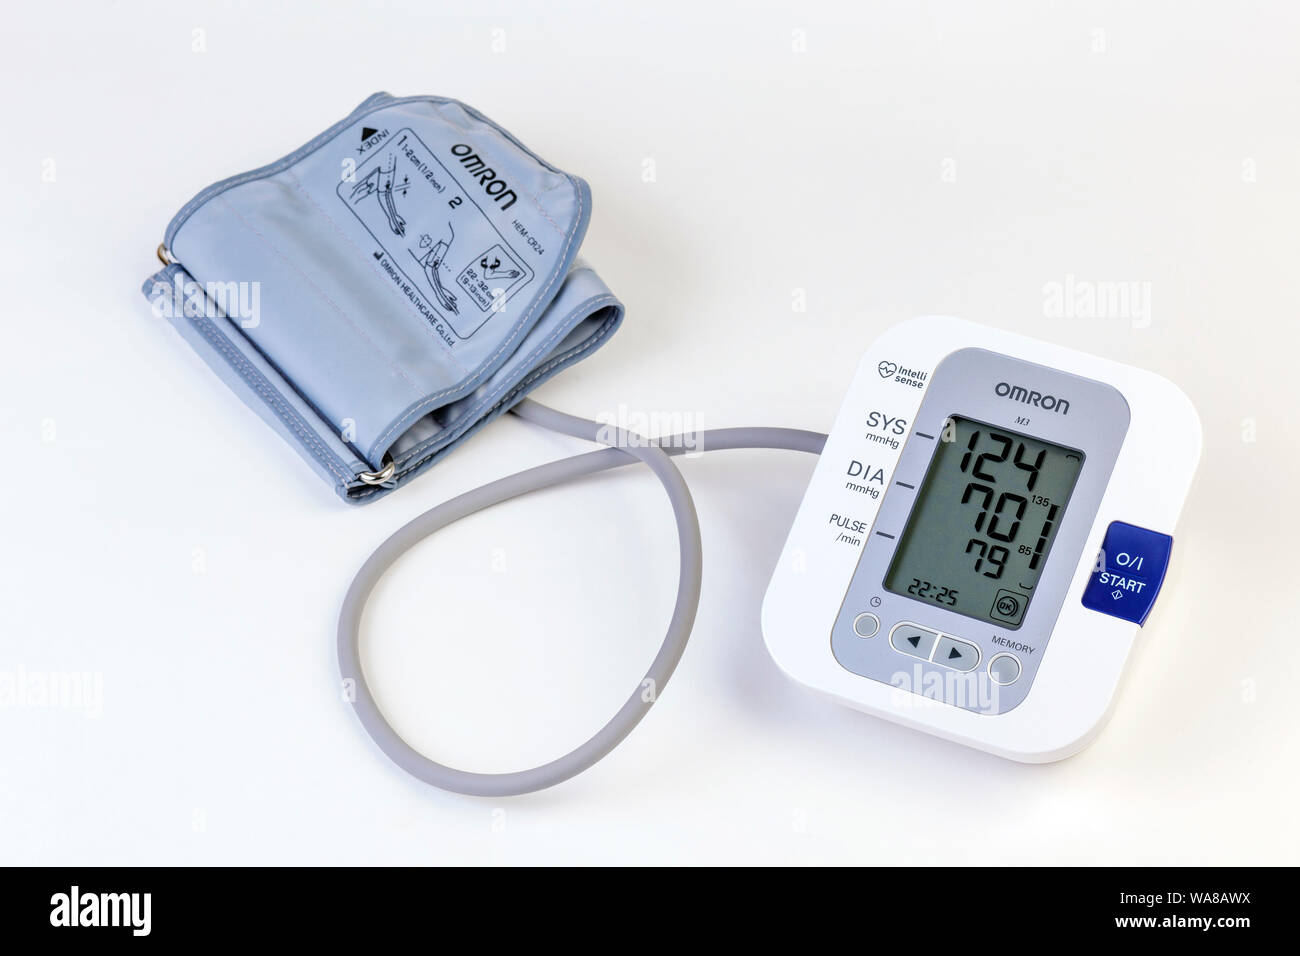 https://c8.alamy.com/comp/WA8AWX/omron-m3-blood-pressure-and-heart-rate-monitor-WA8AWX.jpg